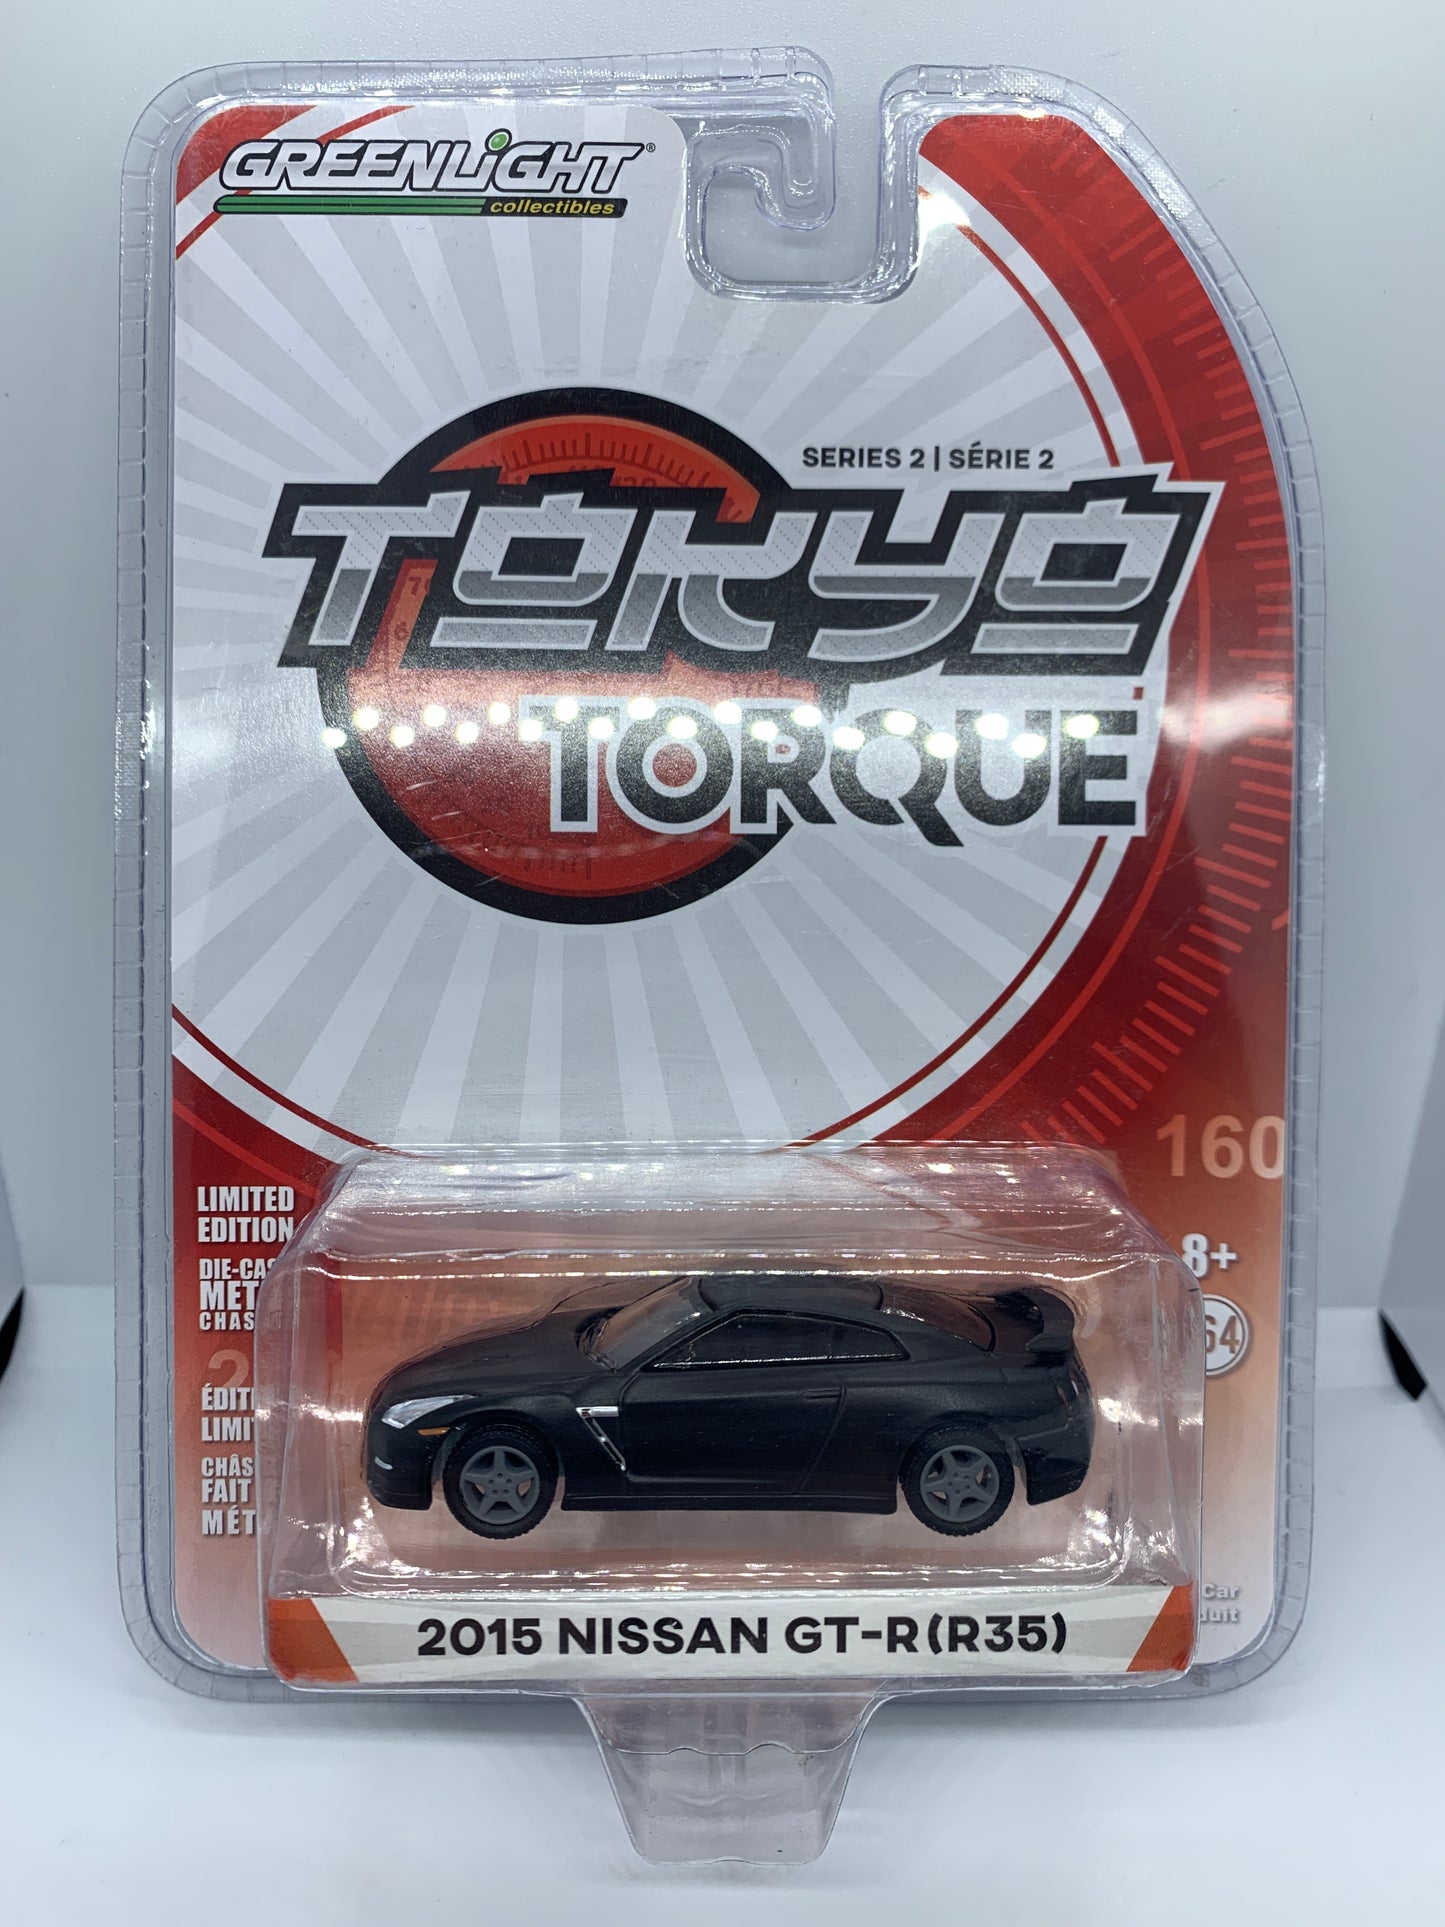 Greenlight - 2015 Nissan GT-R (R35) Matte Black - Tokyo Torque